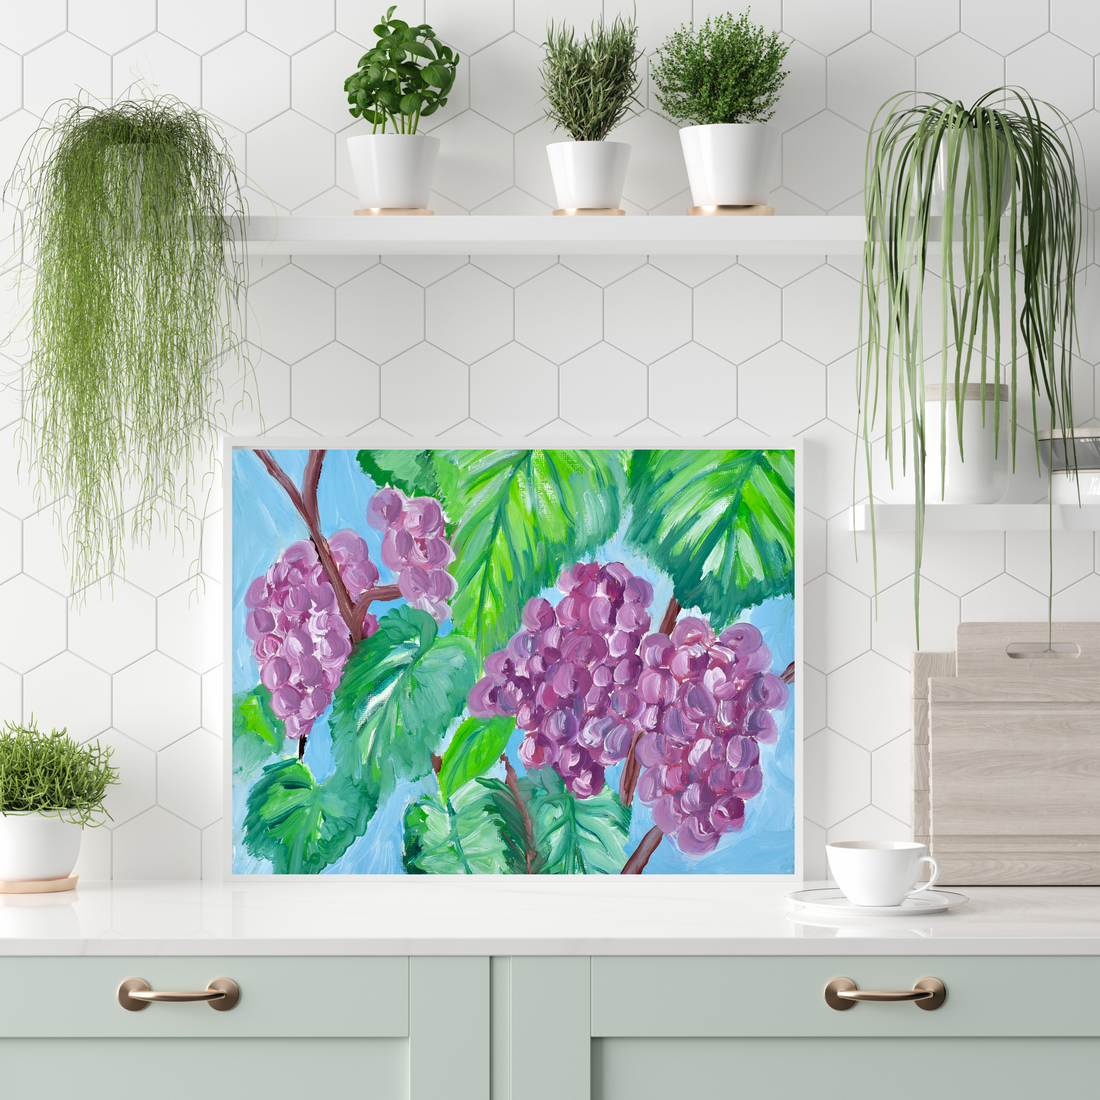 Grapes art print